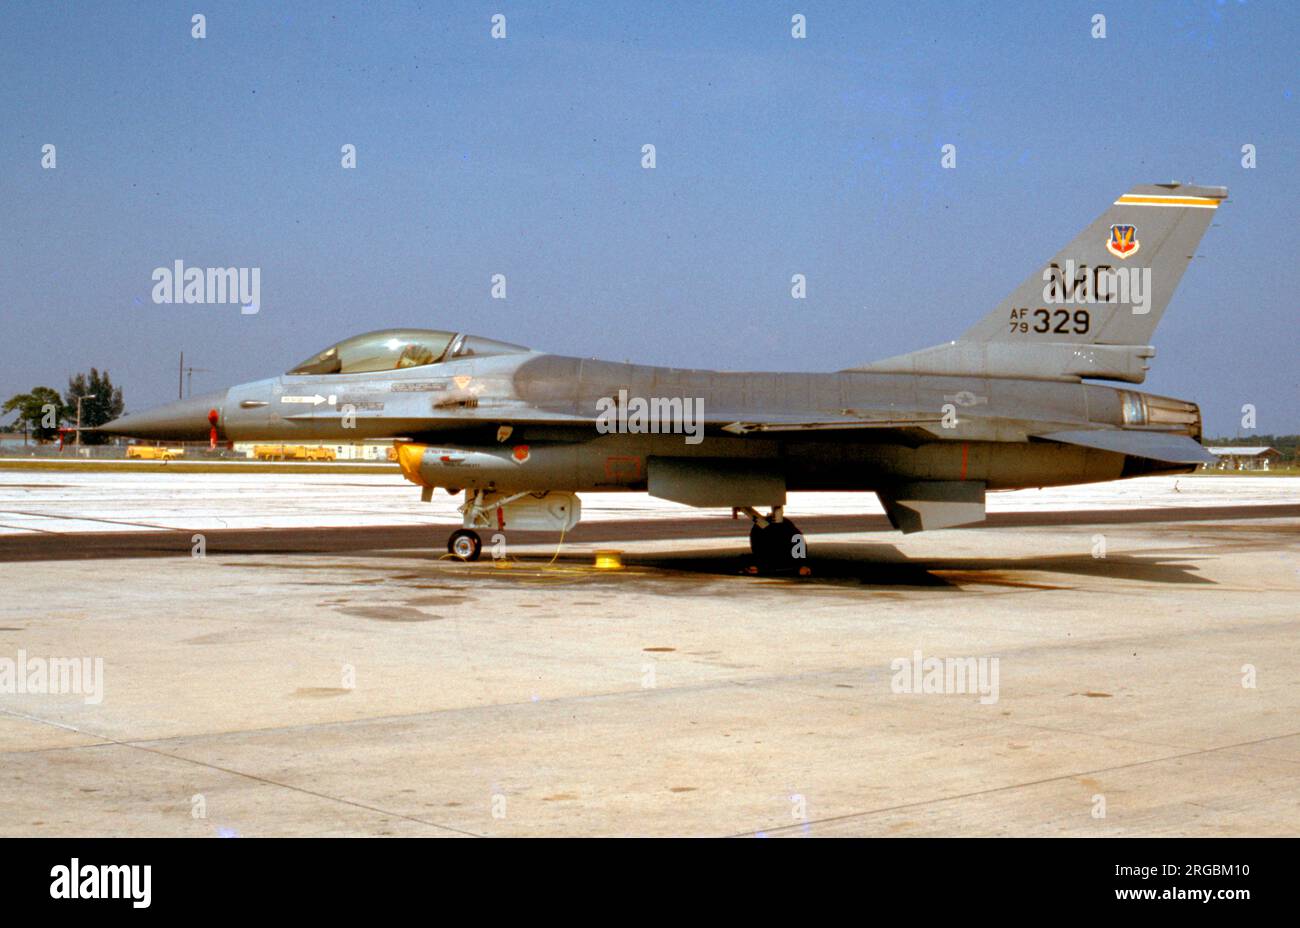 United States Air Force (USAF) - General Dynamics F-16A Block 10 Fighting Falcon 79-0329 (msn 6i-114, codice base 'MC'). Foto Stock